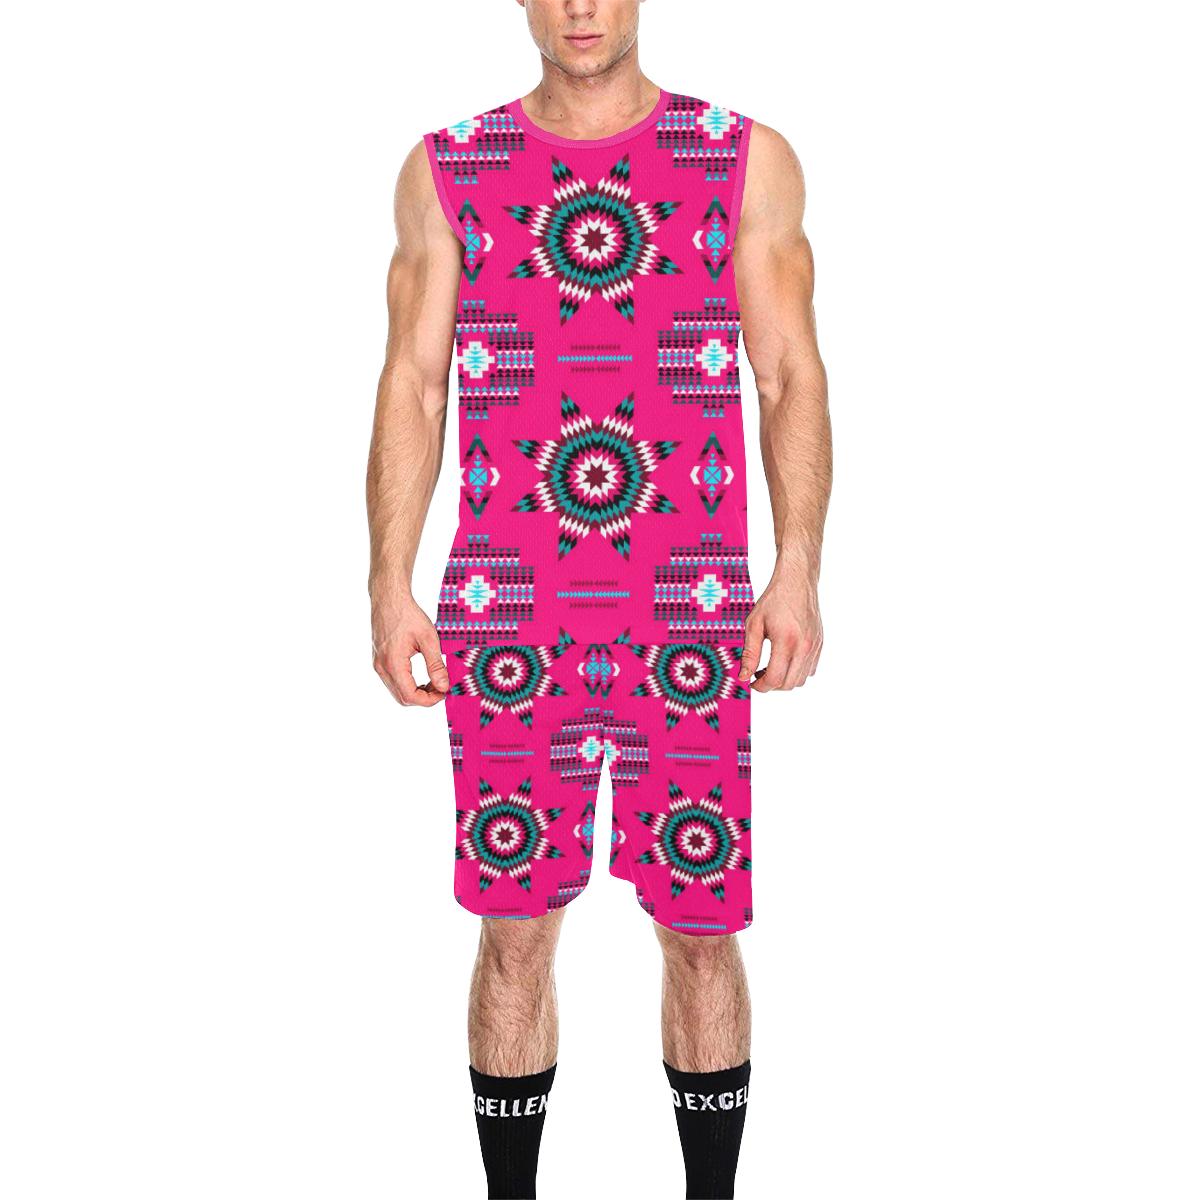 Rising Star Strawberry Moon All Over Print Basketball Uniform Basketball Uniform e-joyer 